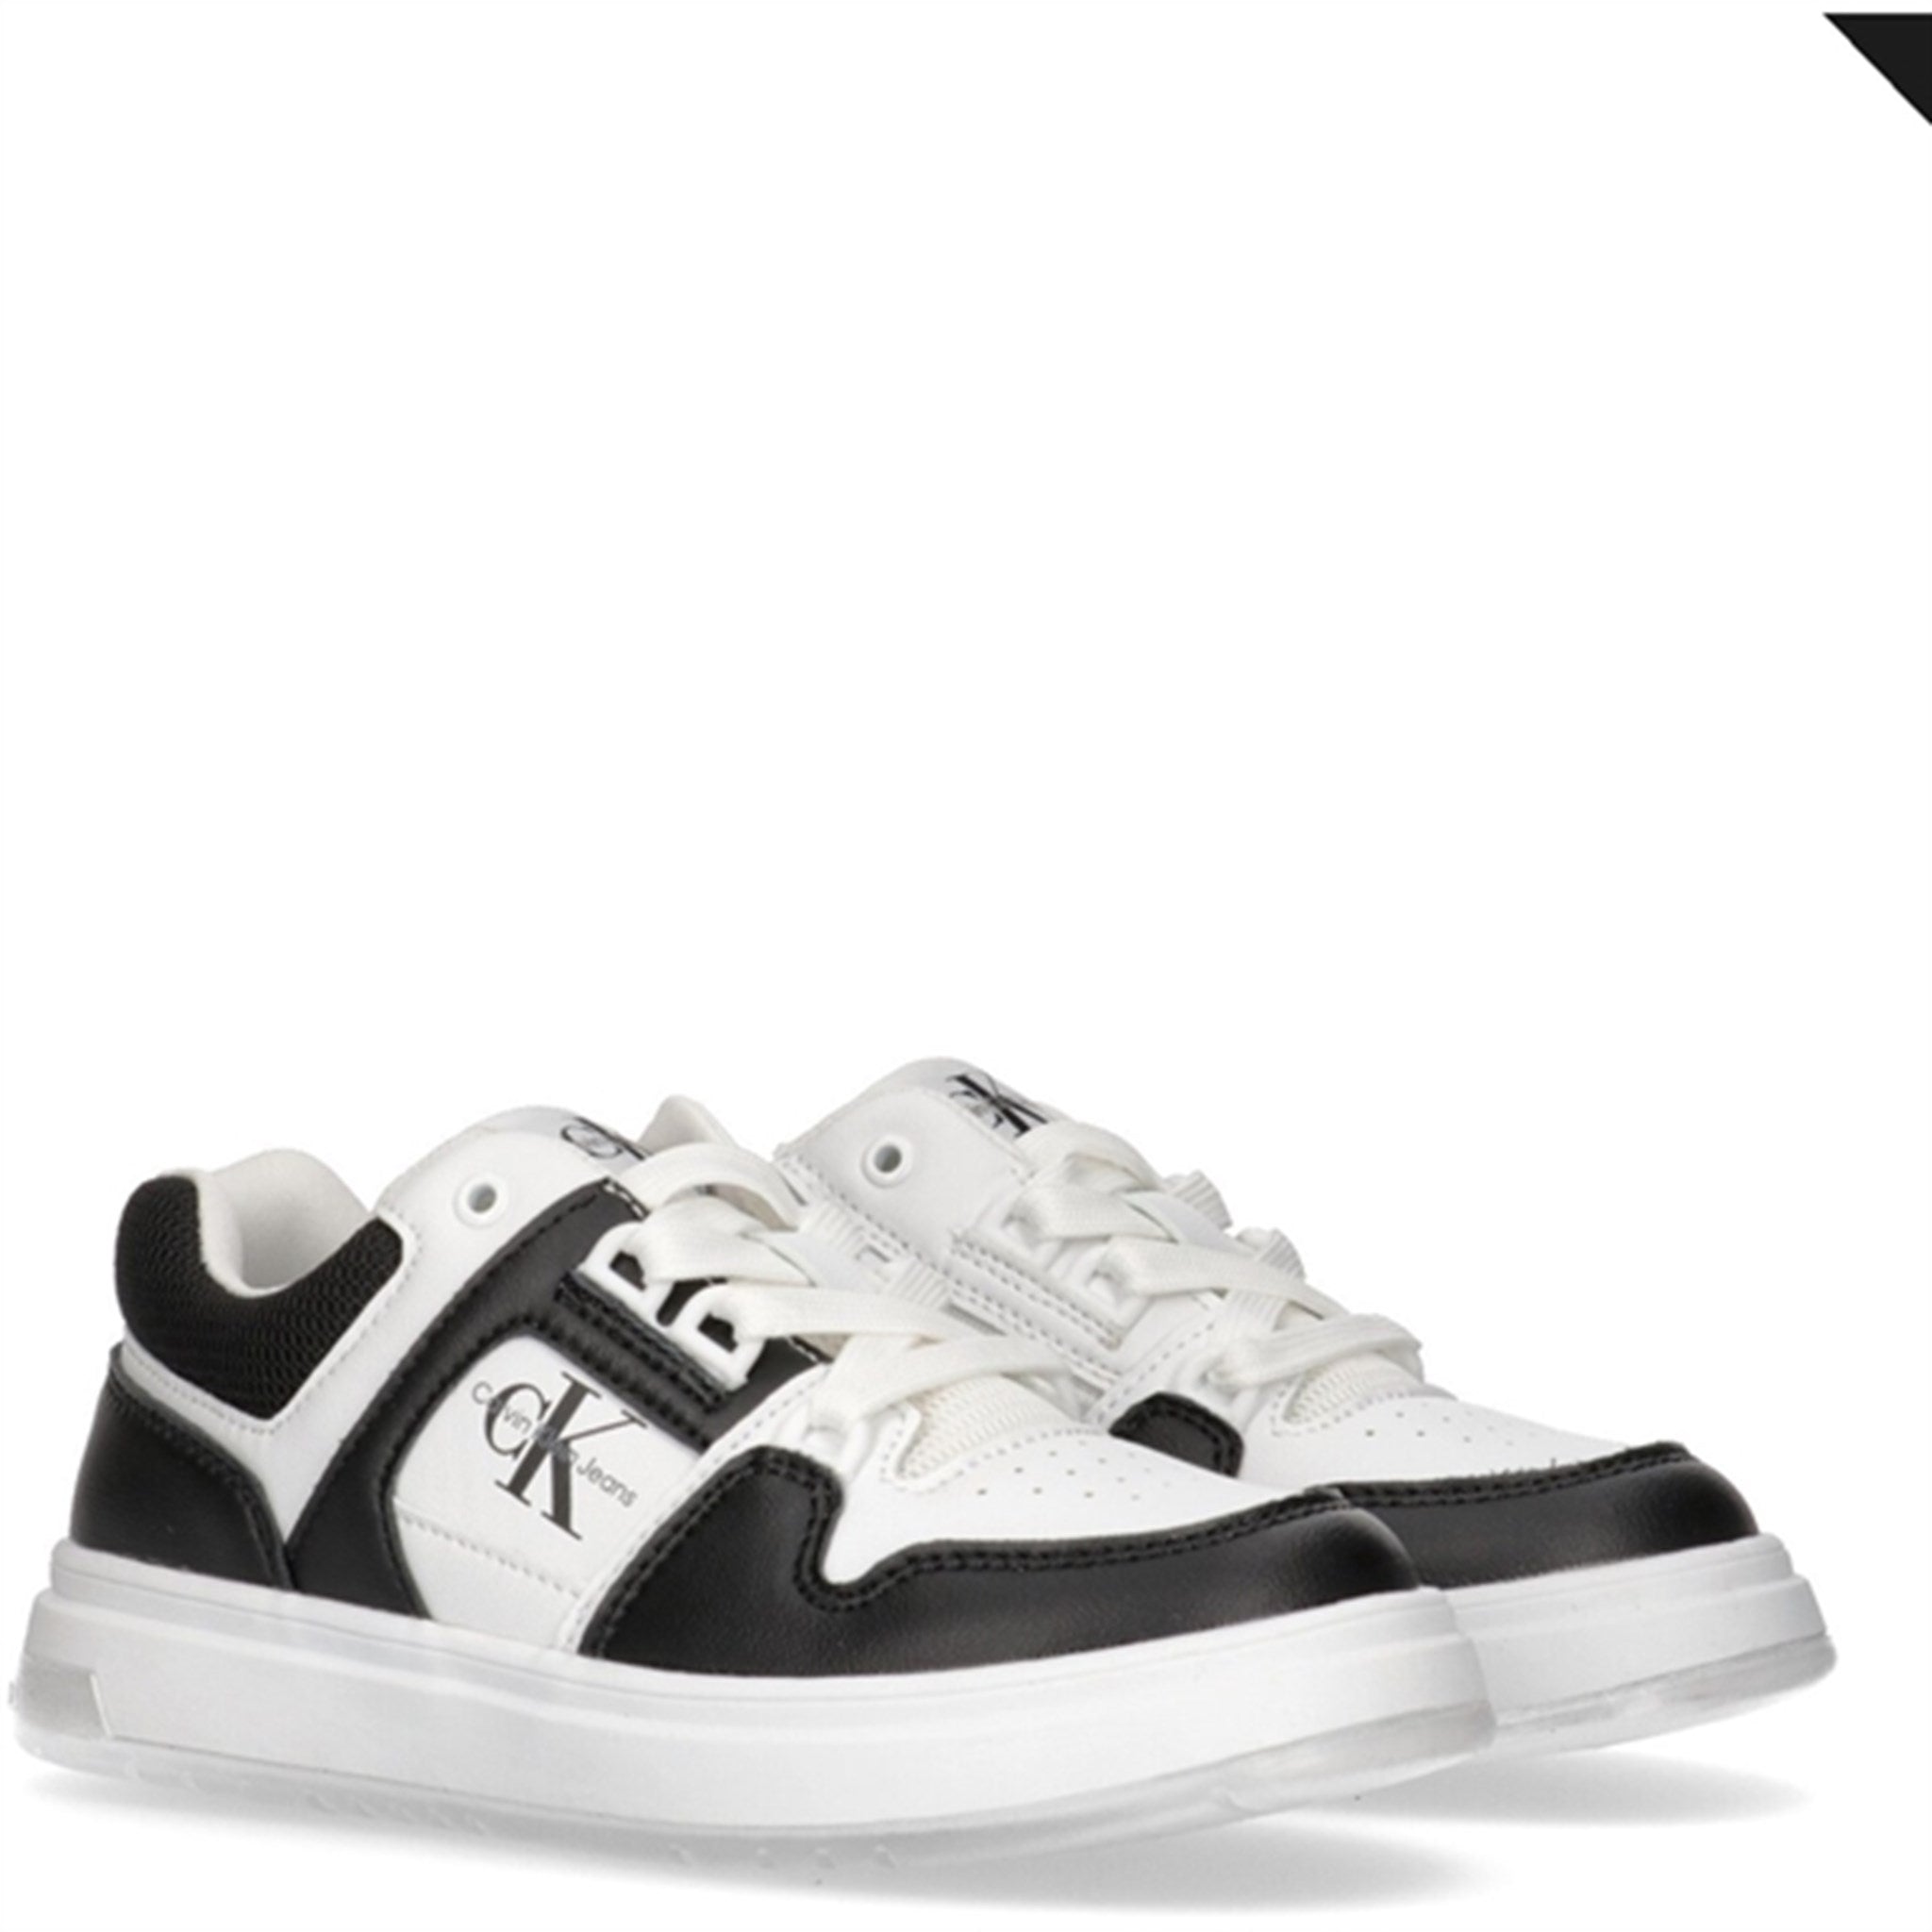 Calvin Klein Low Cut Lace-up Sneaker Black/White